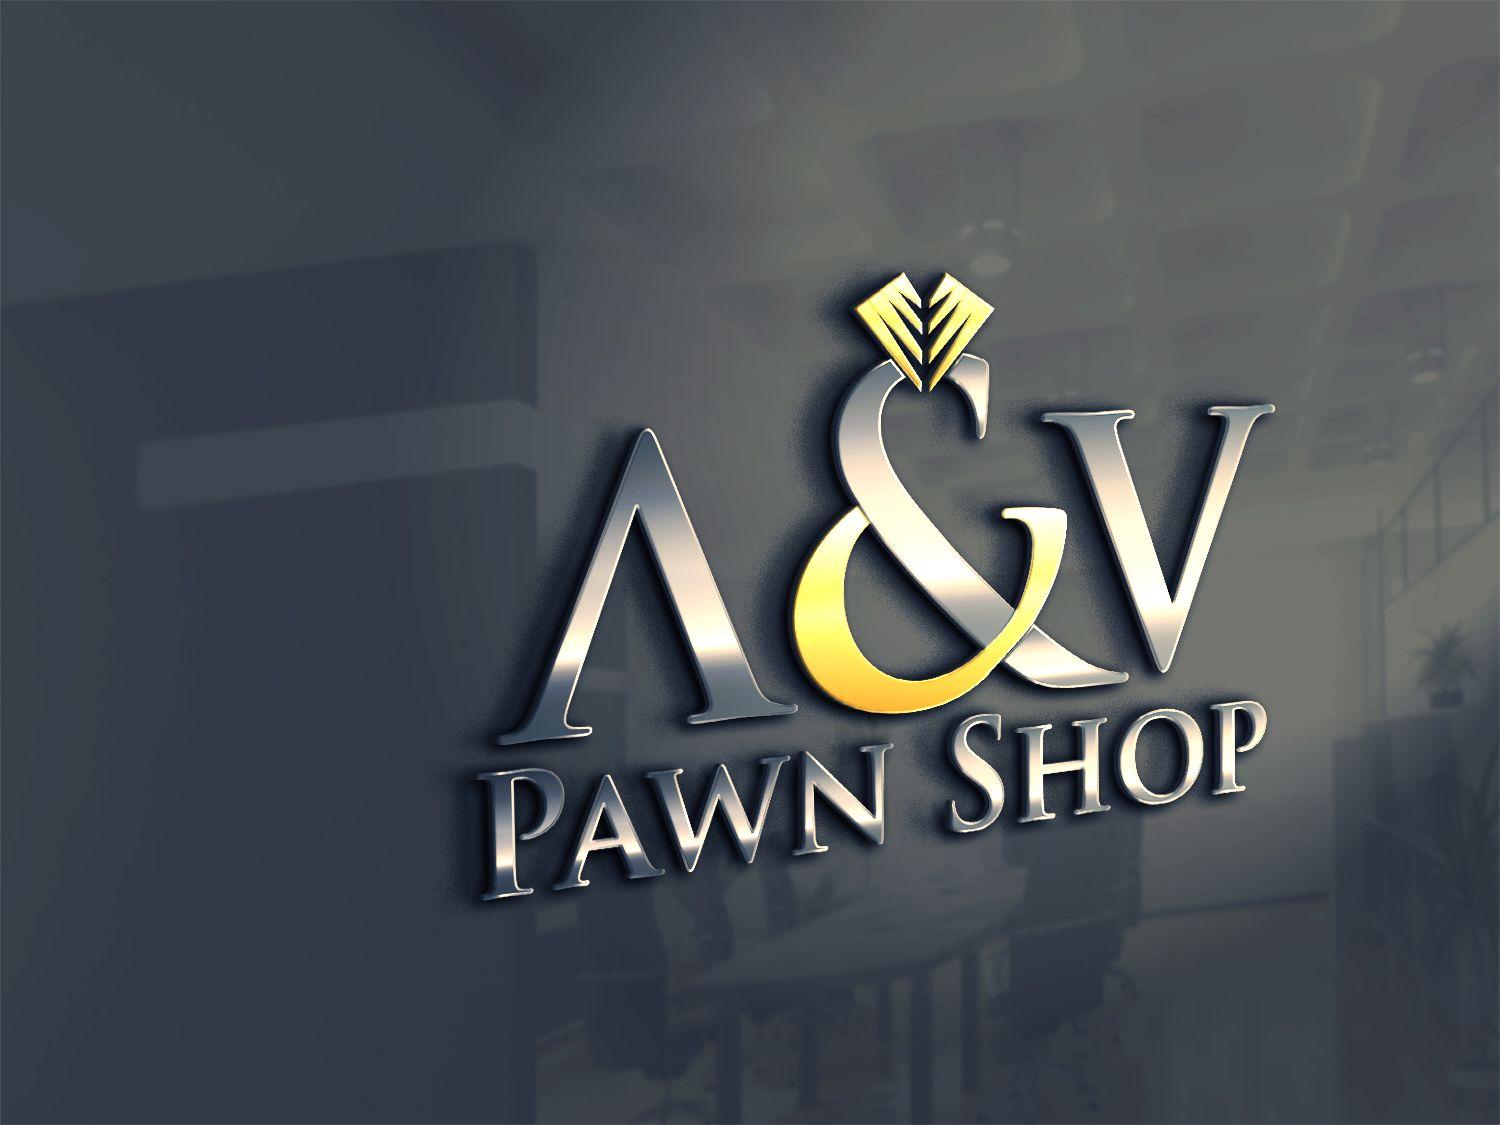 Professional Business Logo - Modern, Professional, Business Logo Design for A&V Pawn